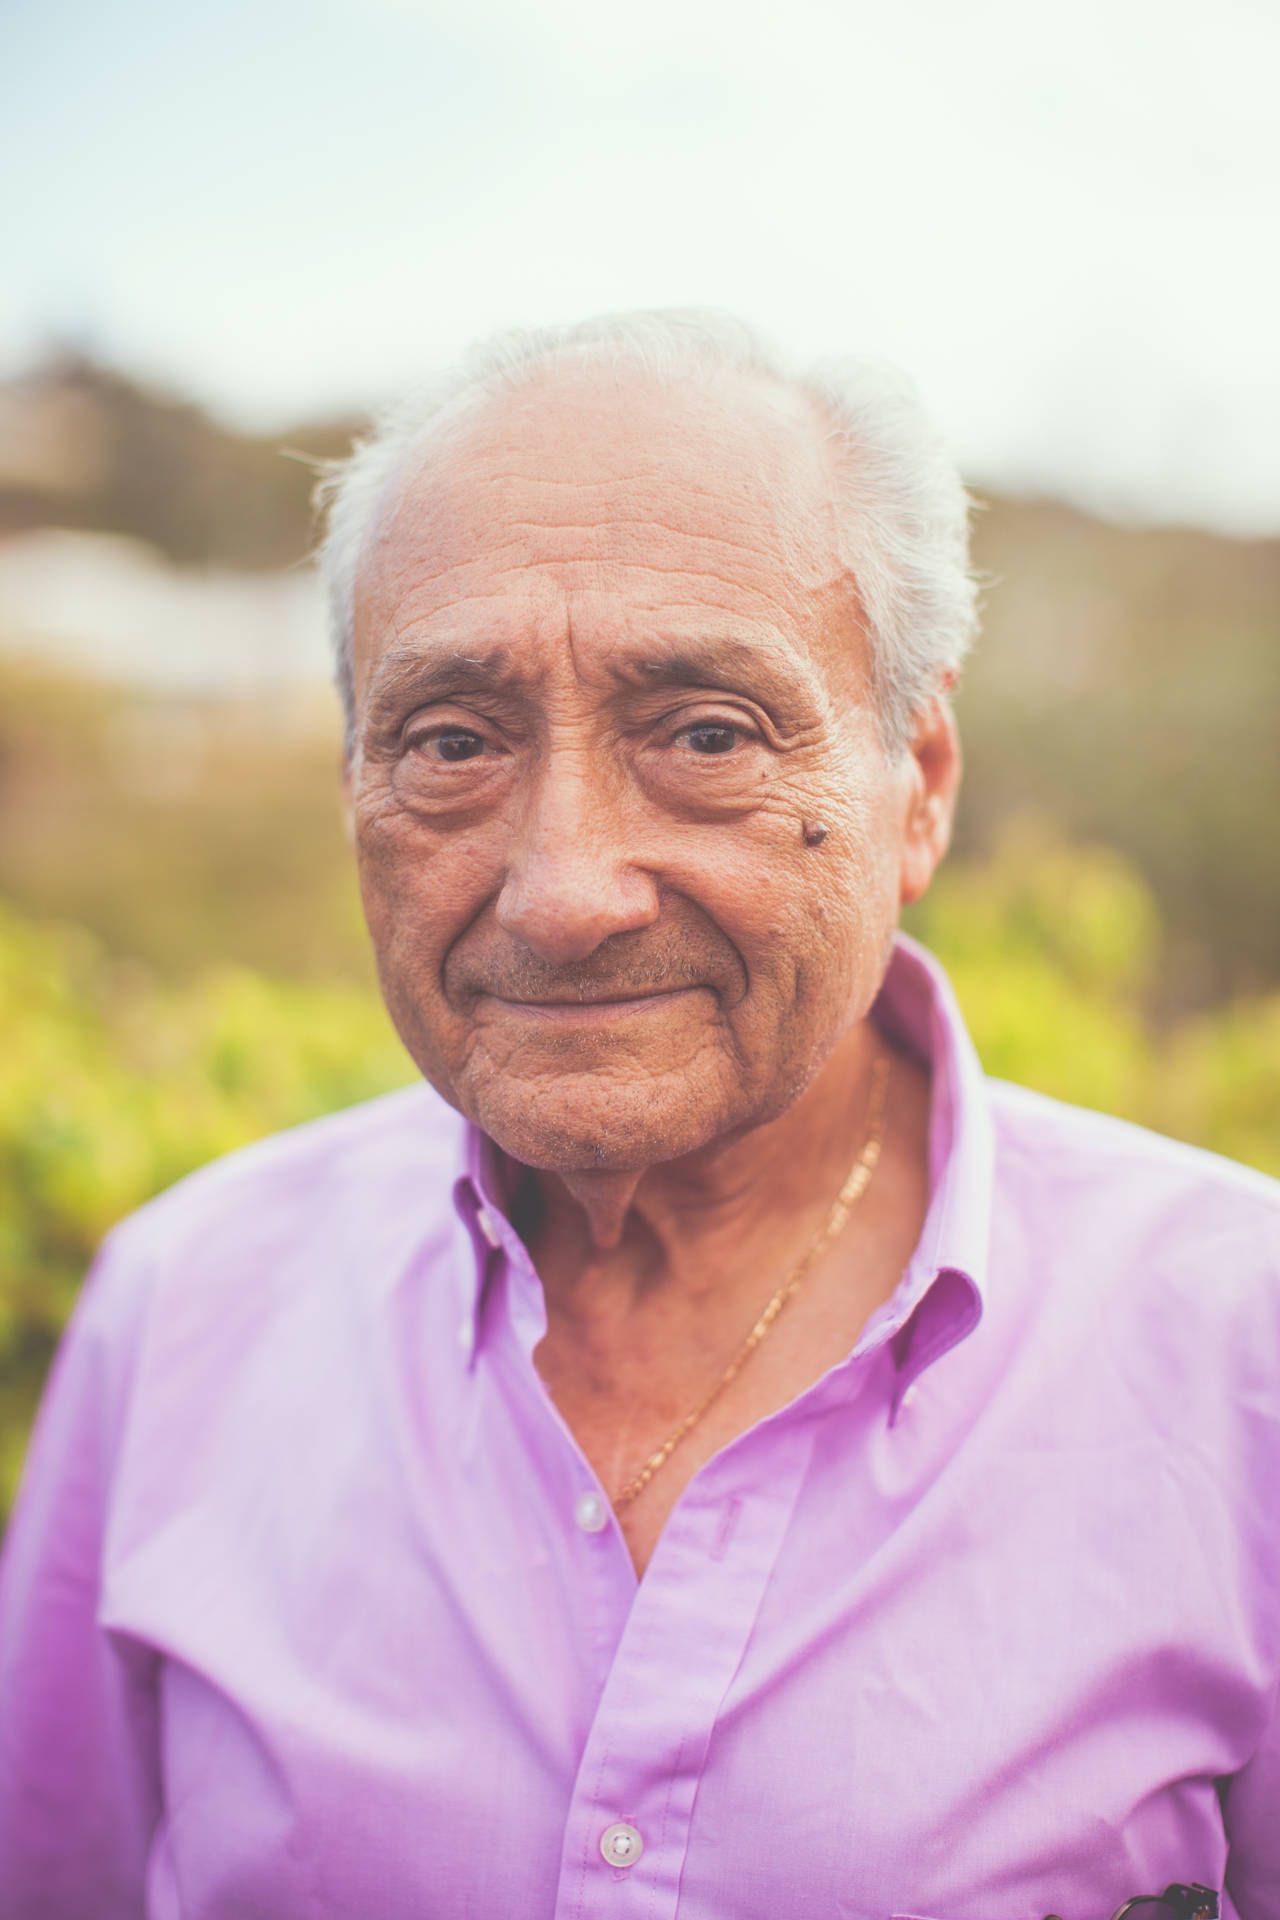 Old Man In Purple Shirt Portrait